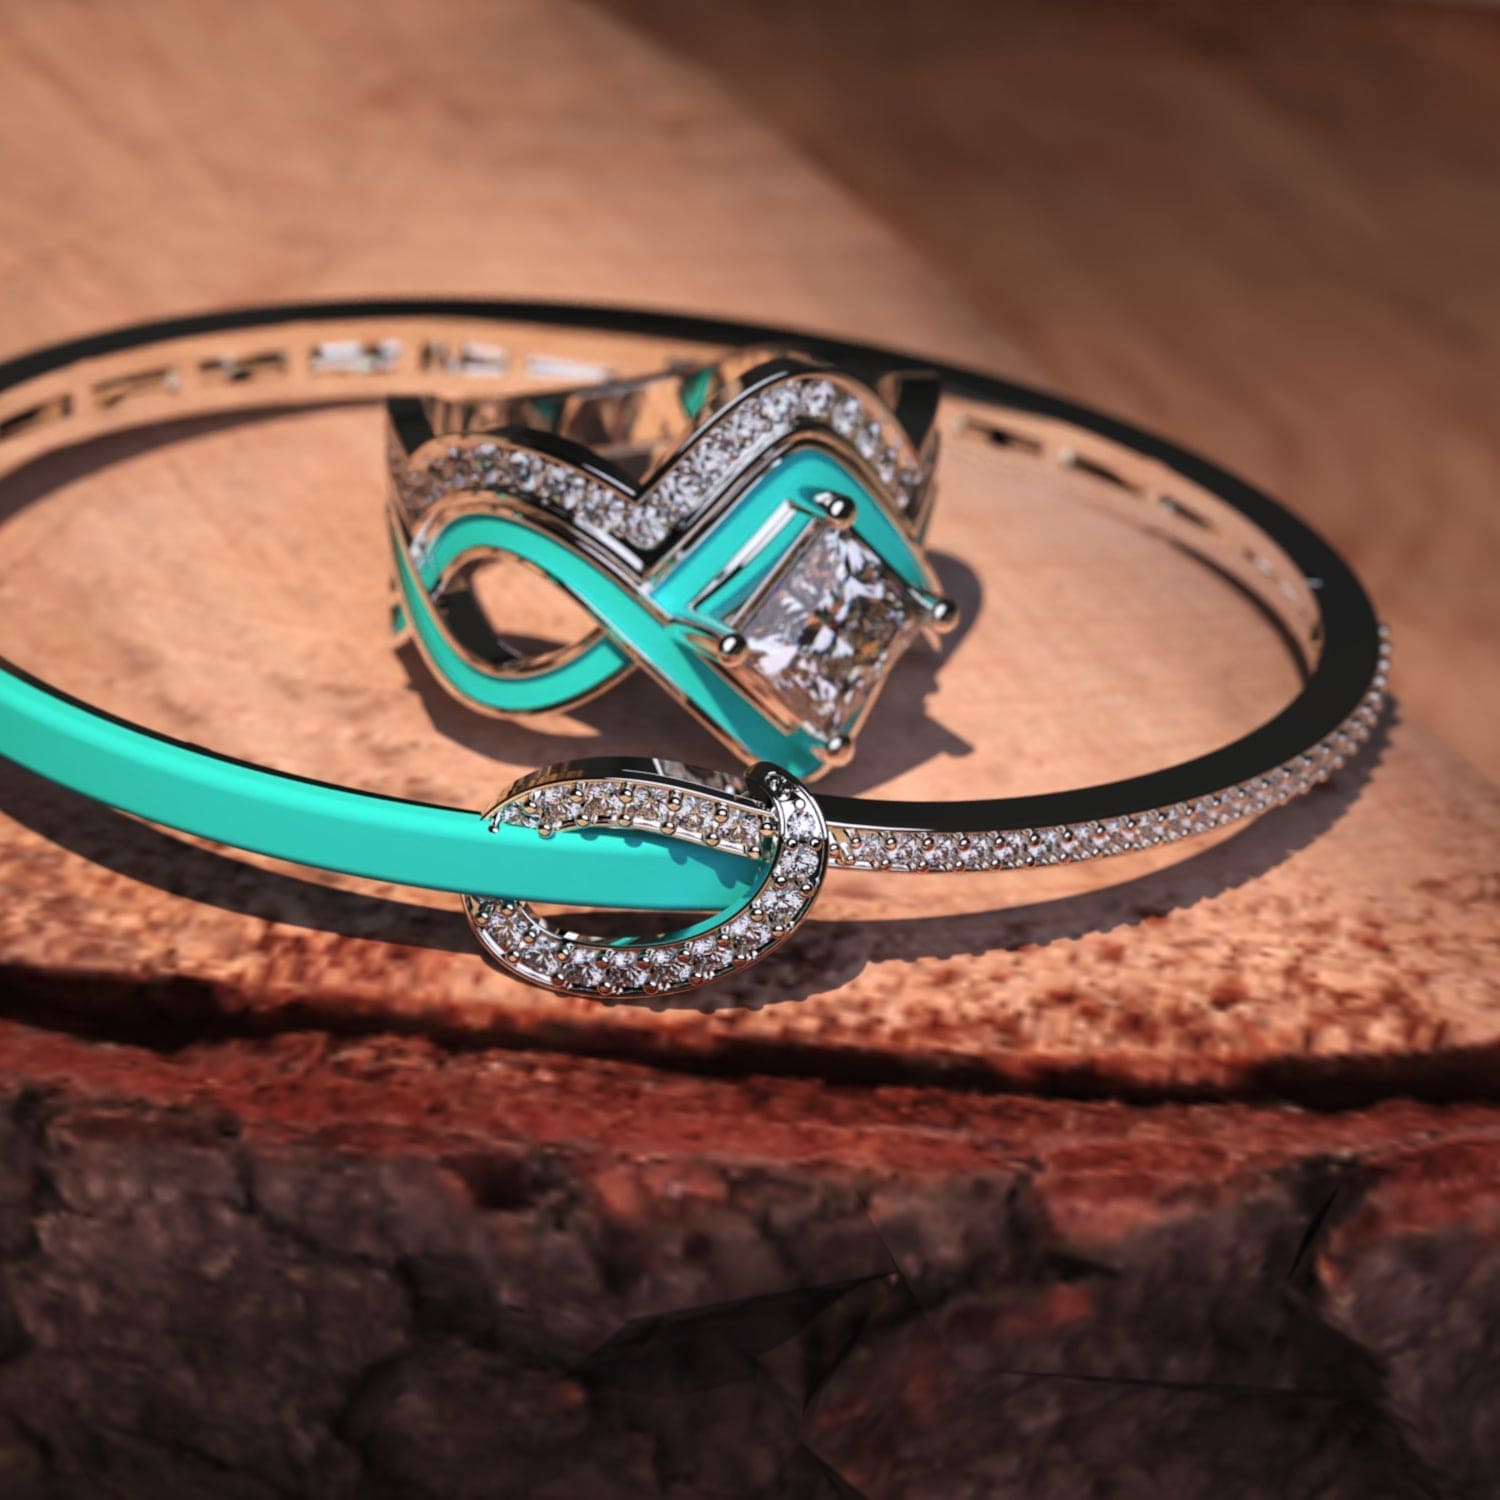 The Ocean Wave: 2-Piece Ring + FREE Bracelet - S925 Sterling Silver